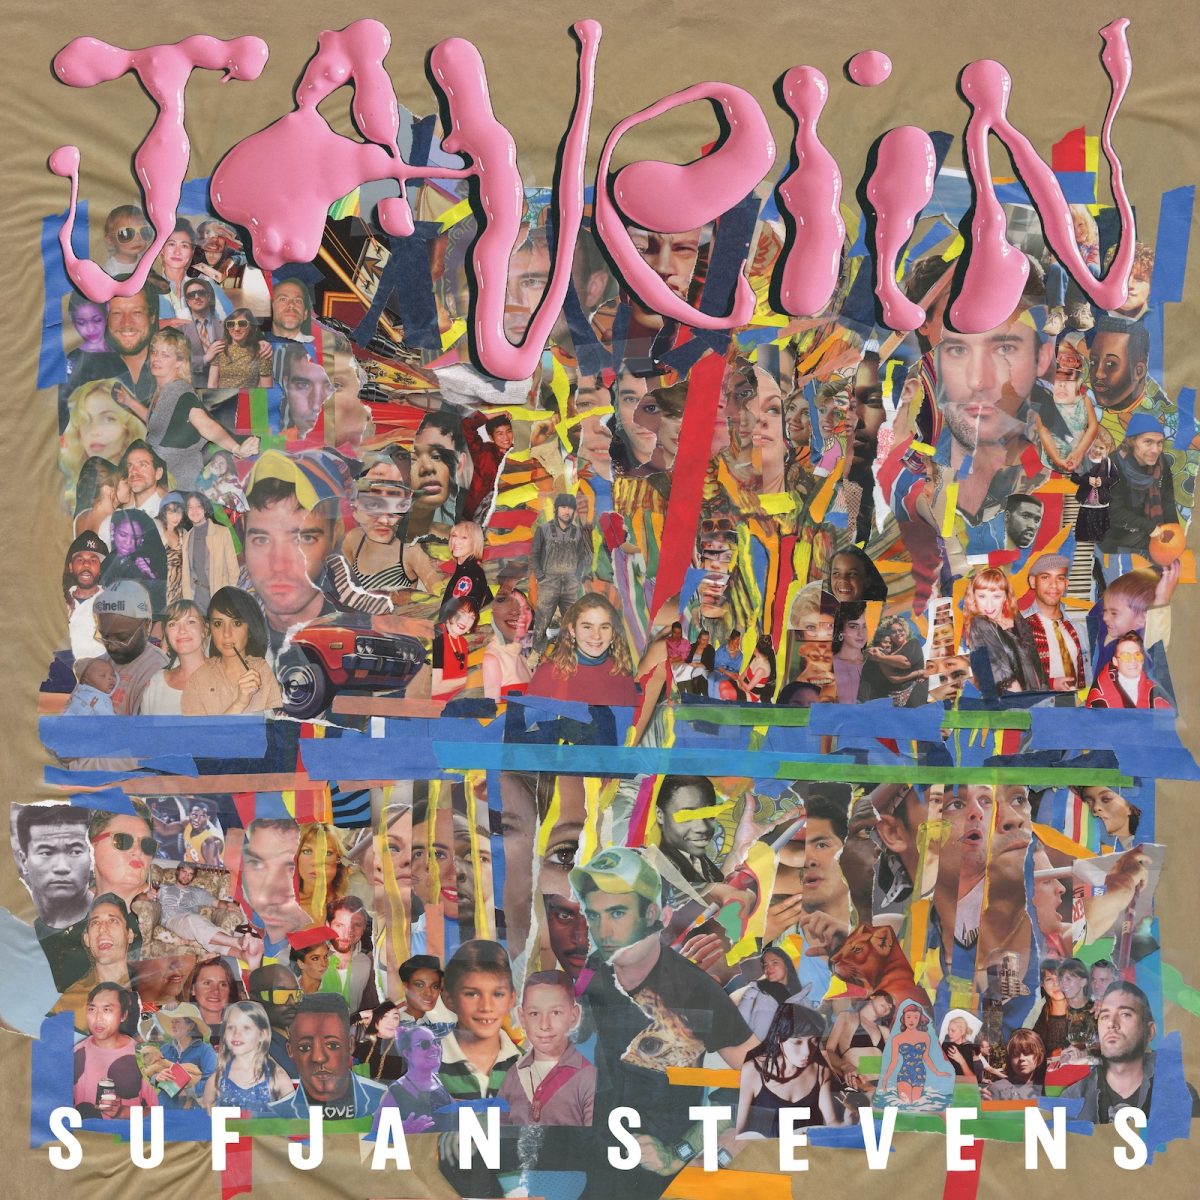 Sufjan+Stevens+broaches+many+momentous+themes+with+his+new+album+%E2%80%9CJavelin.%E2%80%9D+%28Photo+courtesy+of+Asthmatic+Kitty+Records%29